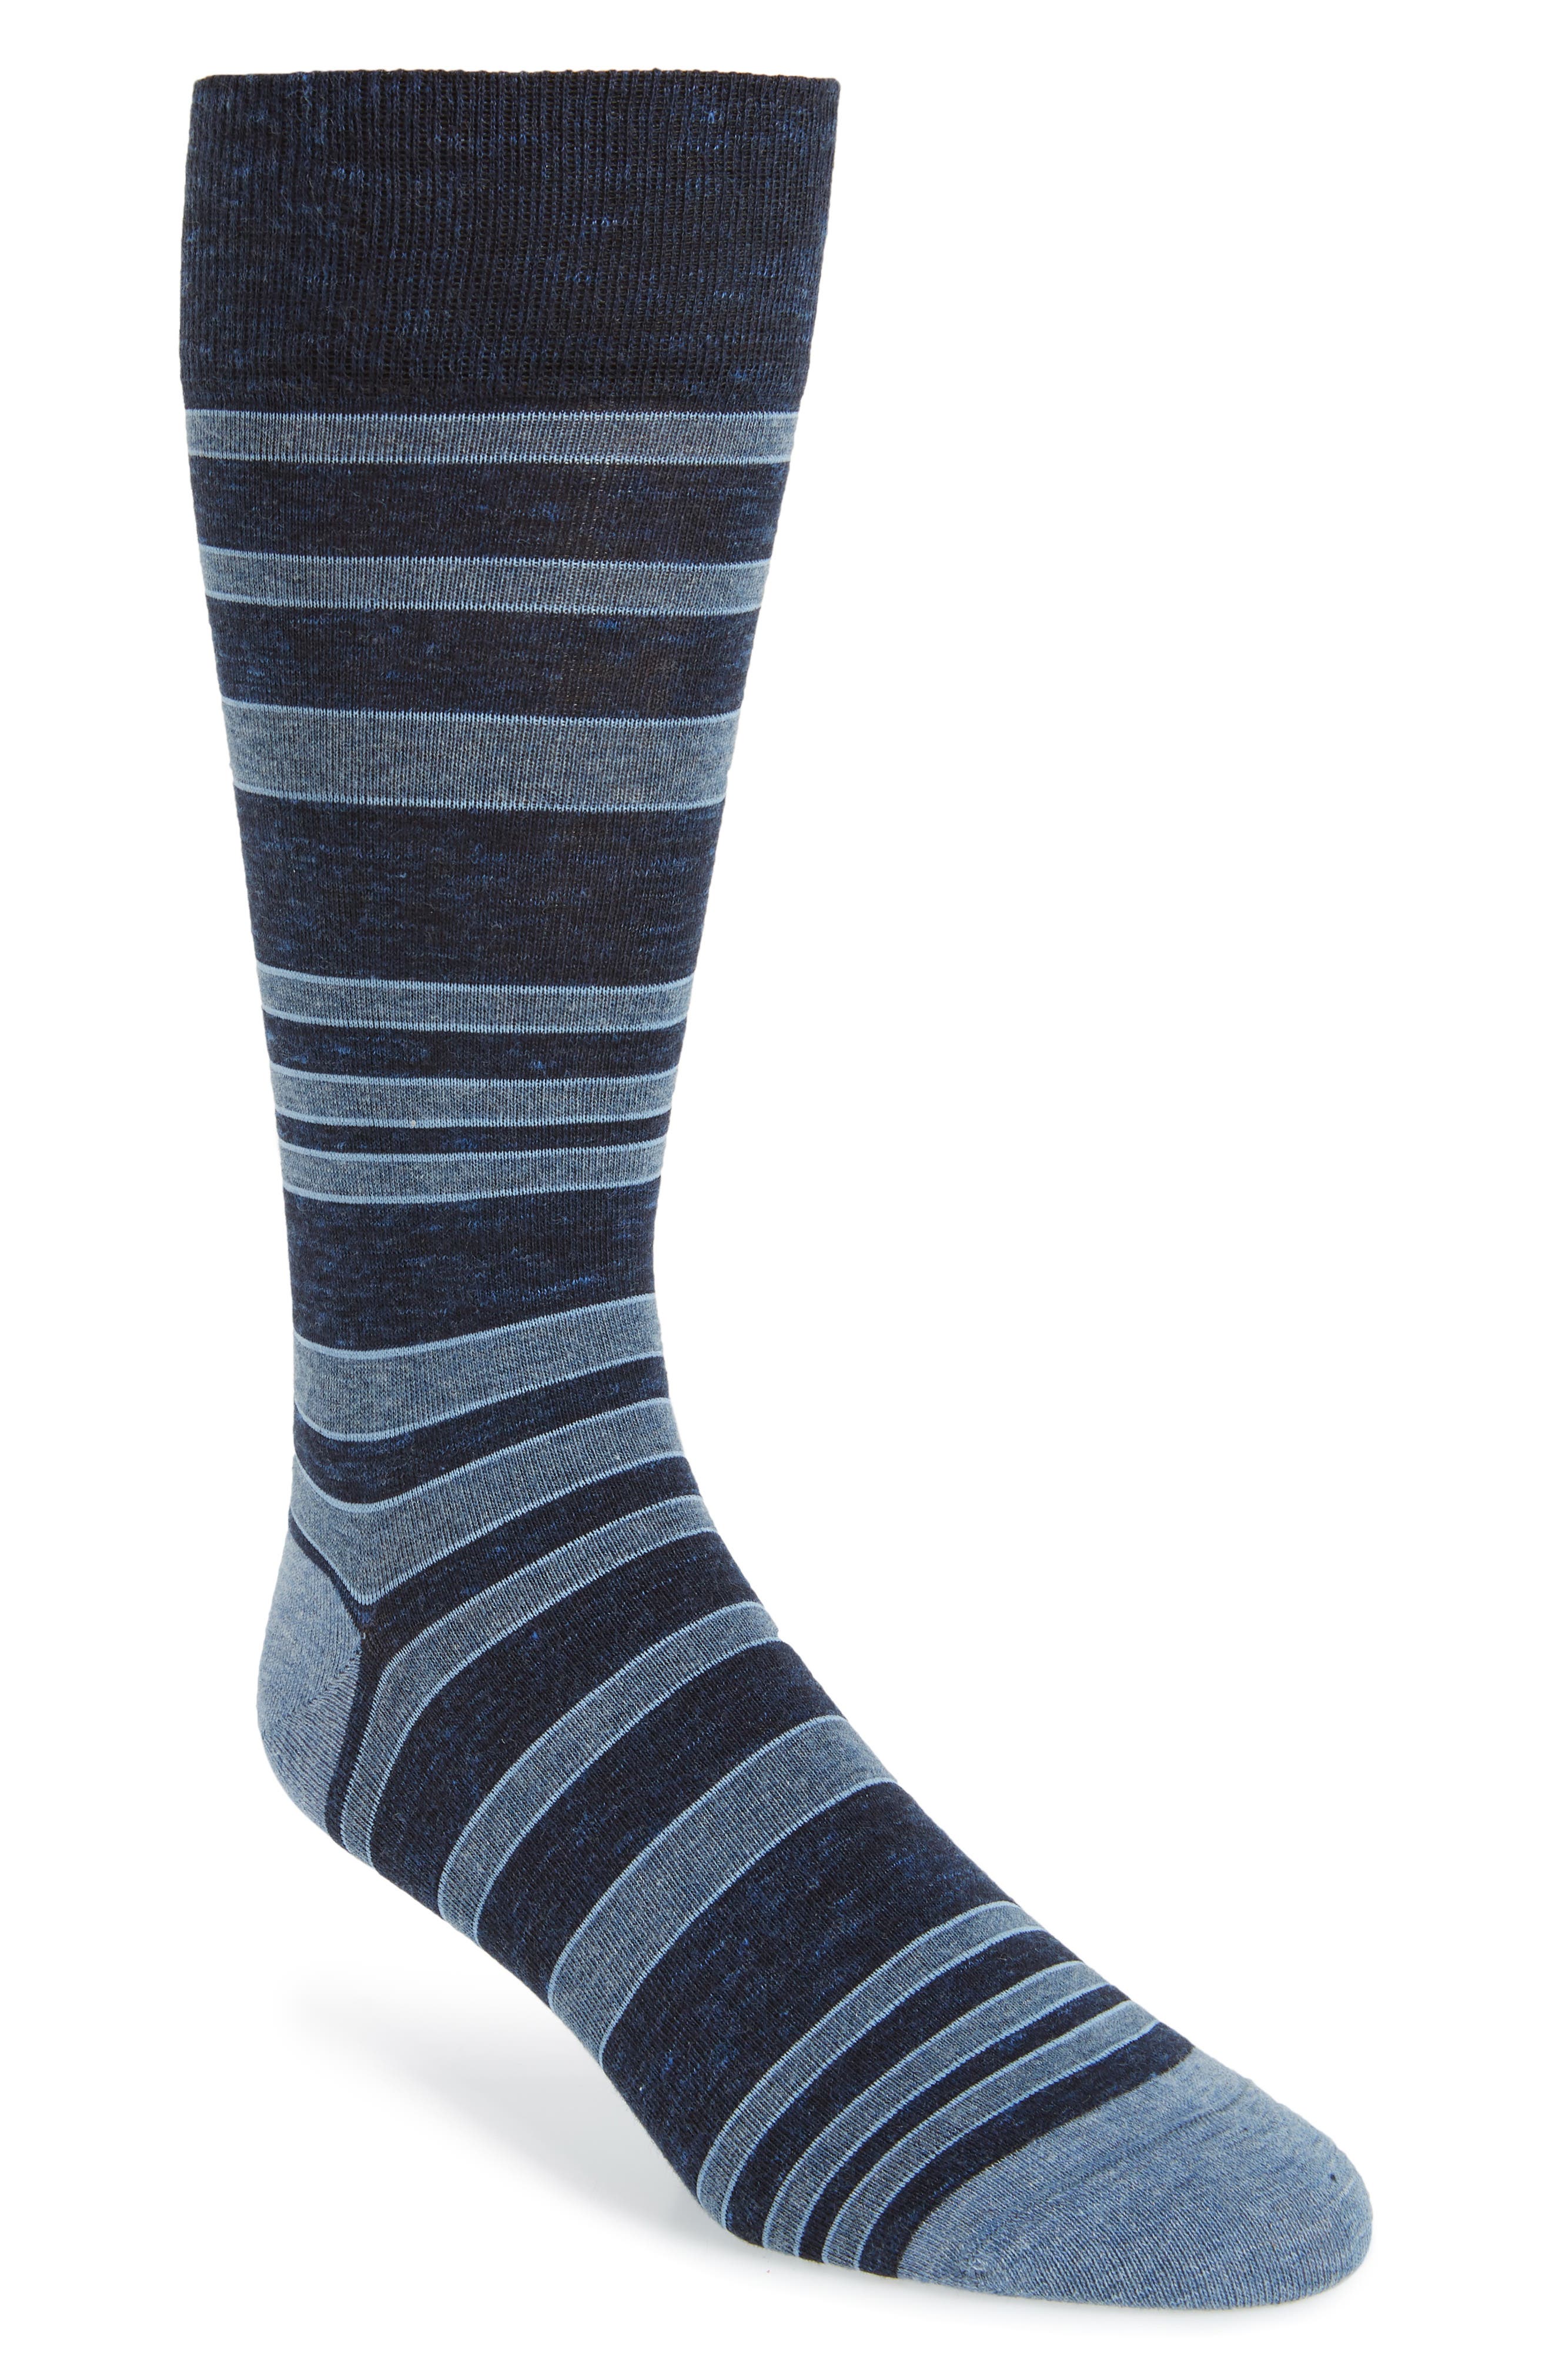 NWT Nordstrom 3 Pack Men/'s Sz 6.5-12 Ultra Soft Blue Stripes Crew Socks